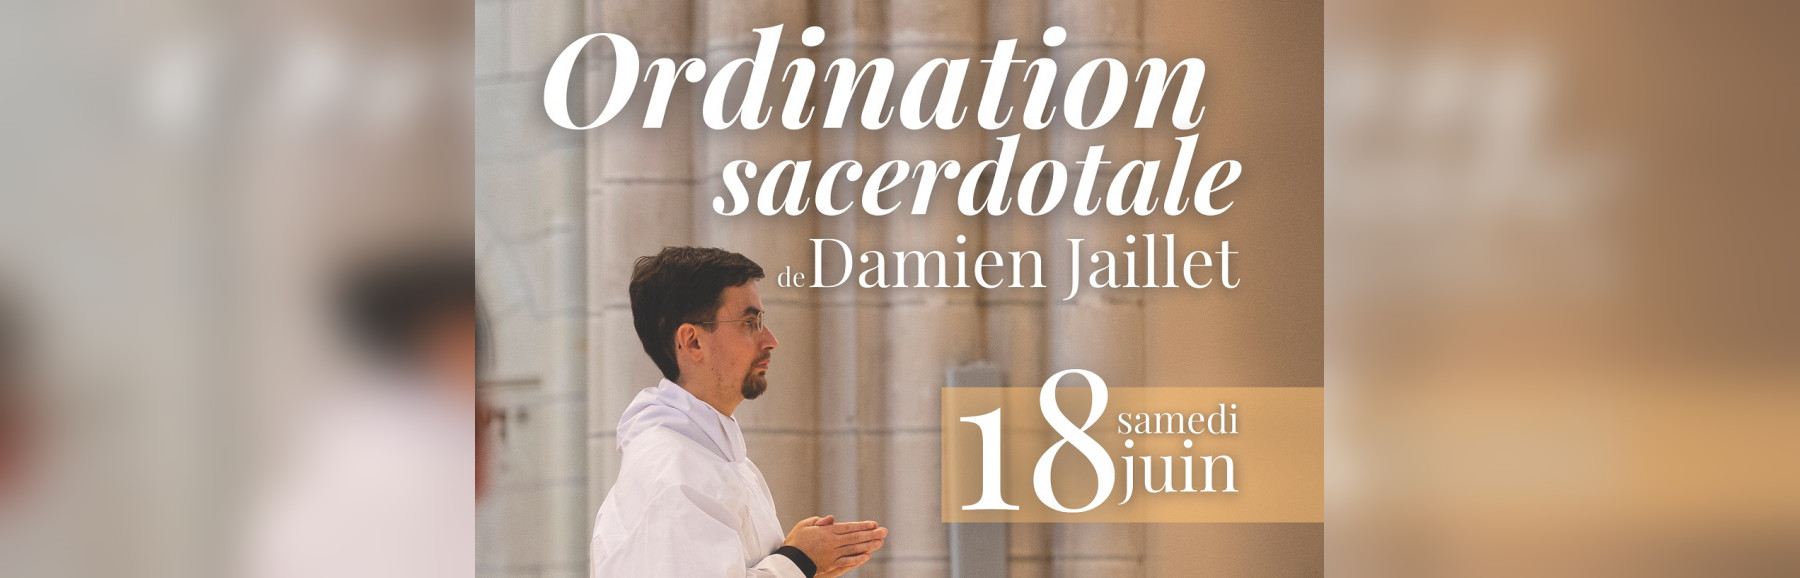 Ordination_Damien_bandeau